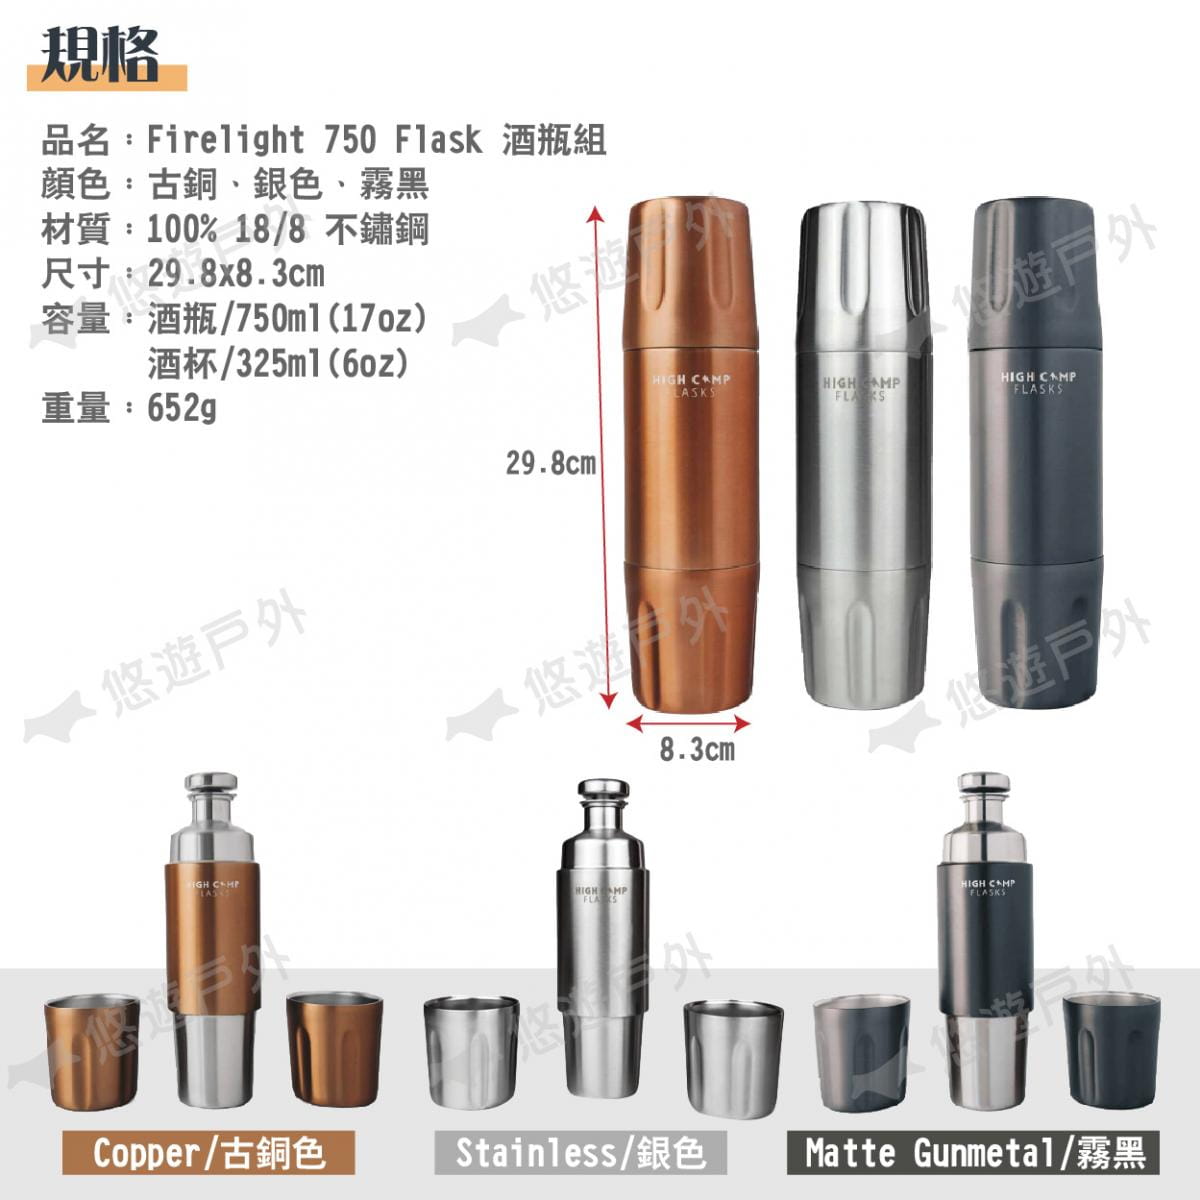 【HIGH CAMP】Firelight 750 Flask 酒瓶組_750ml (悠遊戶外) 6